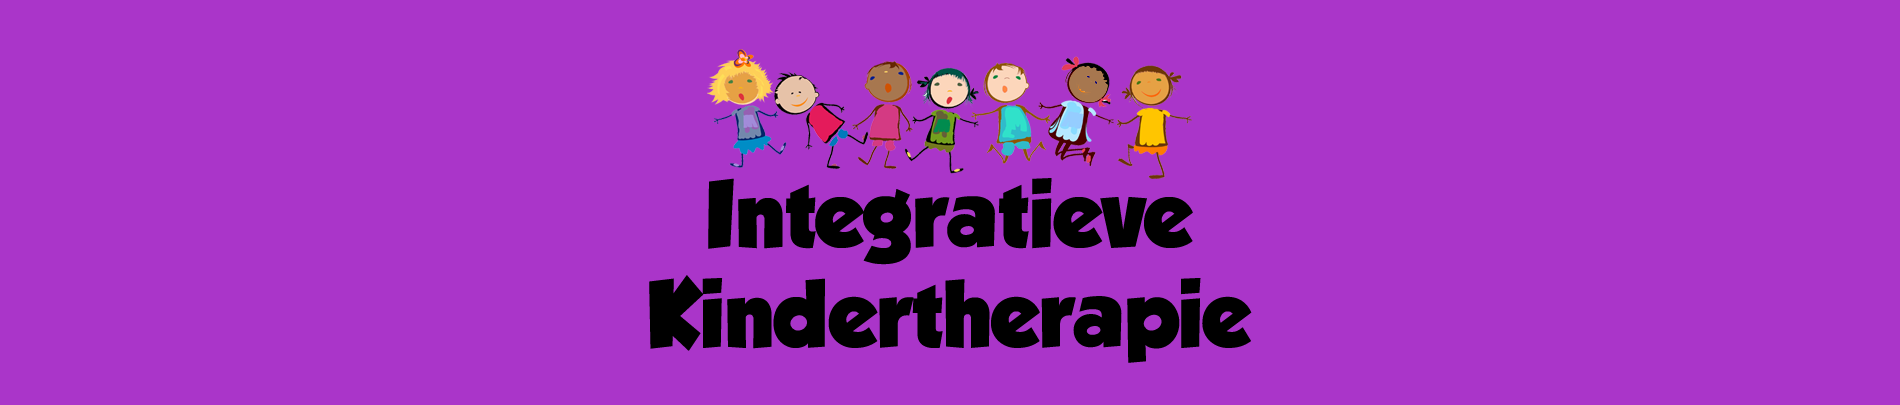 Integratieve Kindertherapie